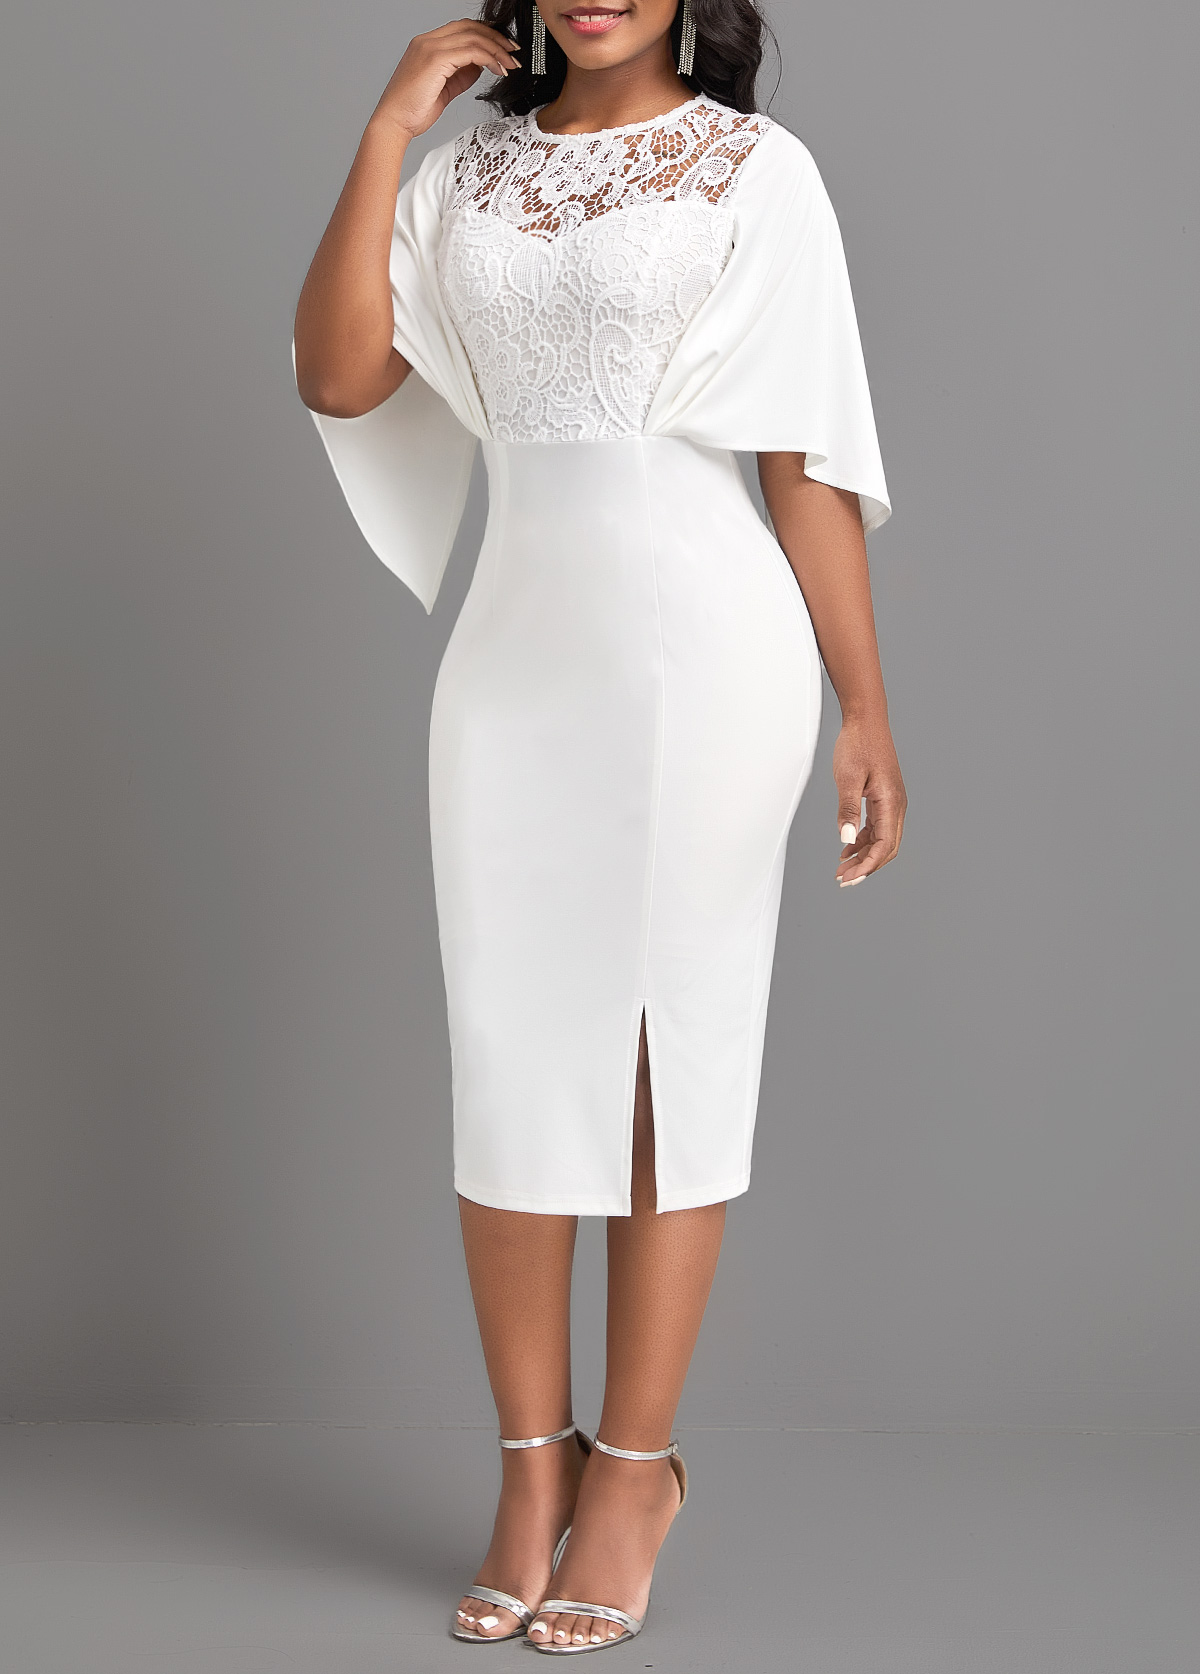 White Lace Half Sleeve Bodycon Dress